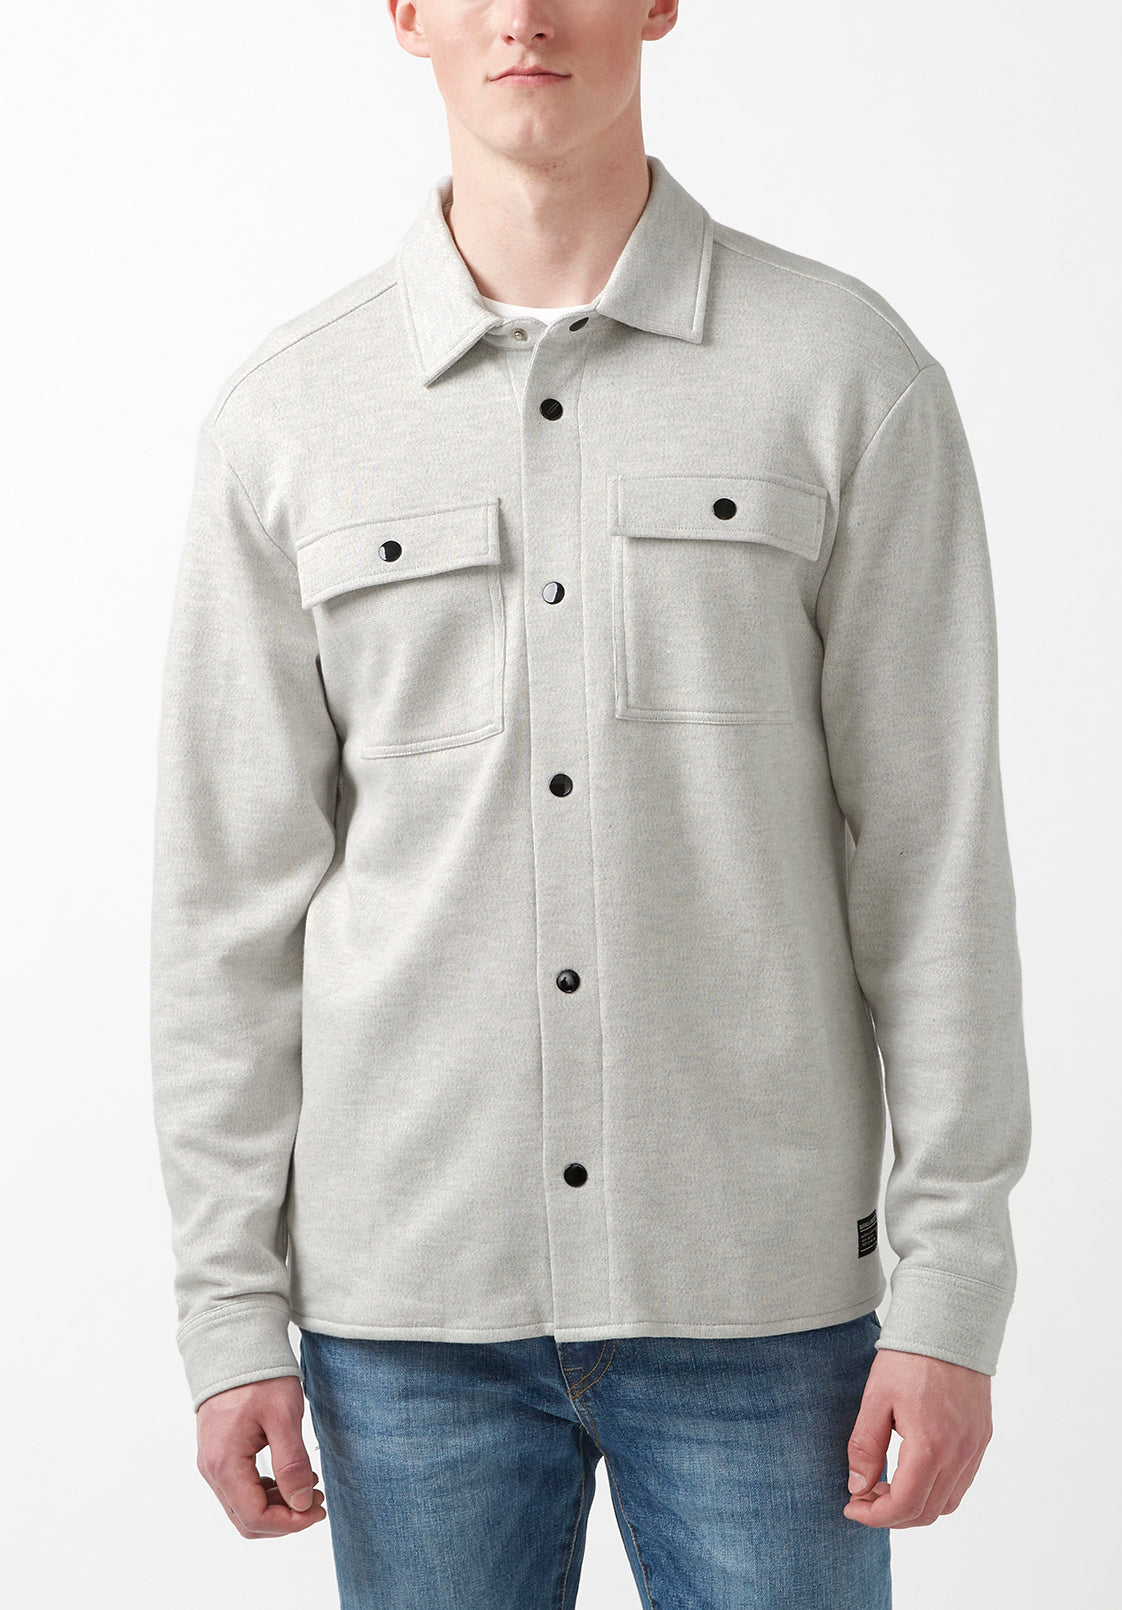 Fabion Light Heather Grey Men's Shirt Jacket – Buffalo Jeans - US